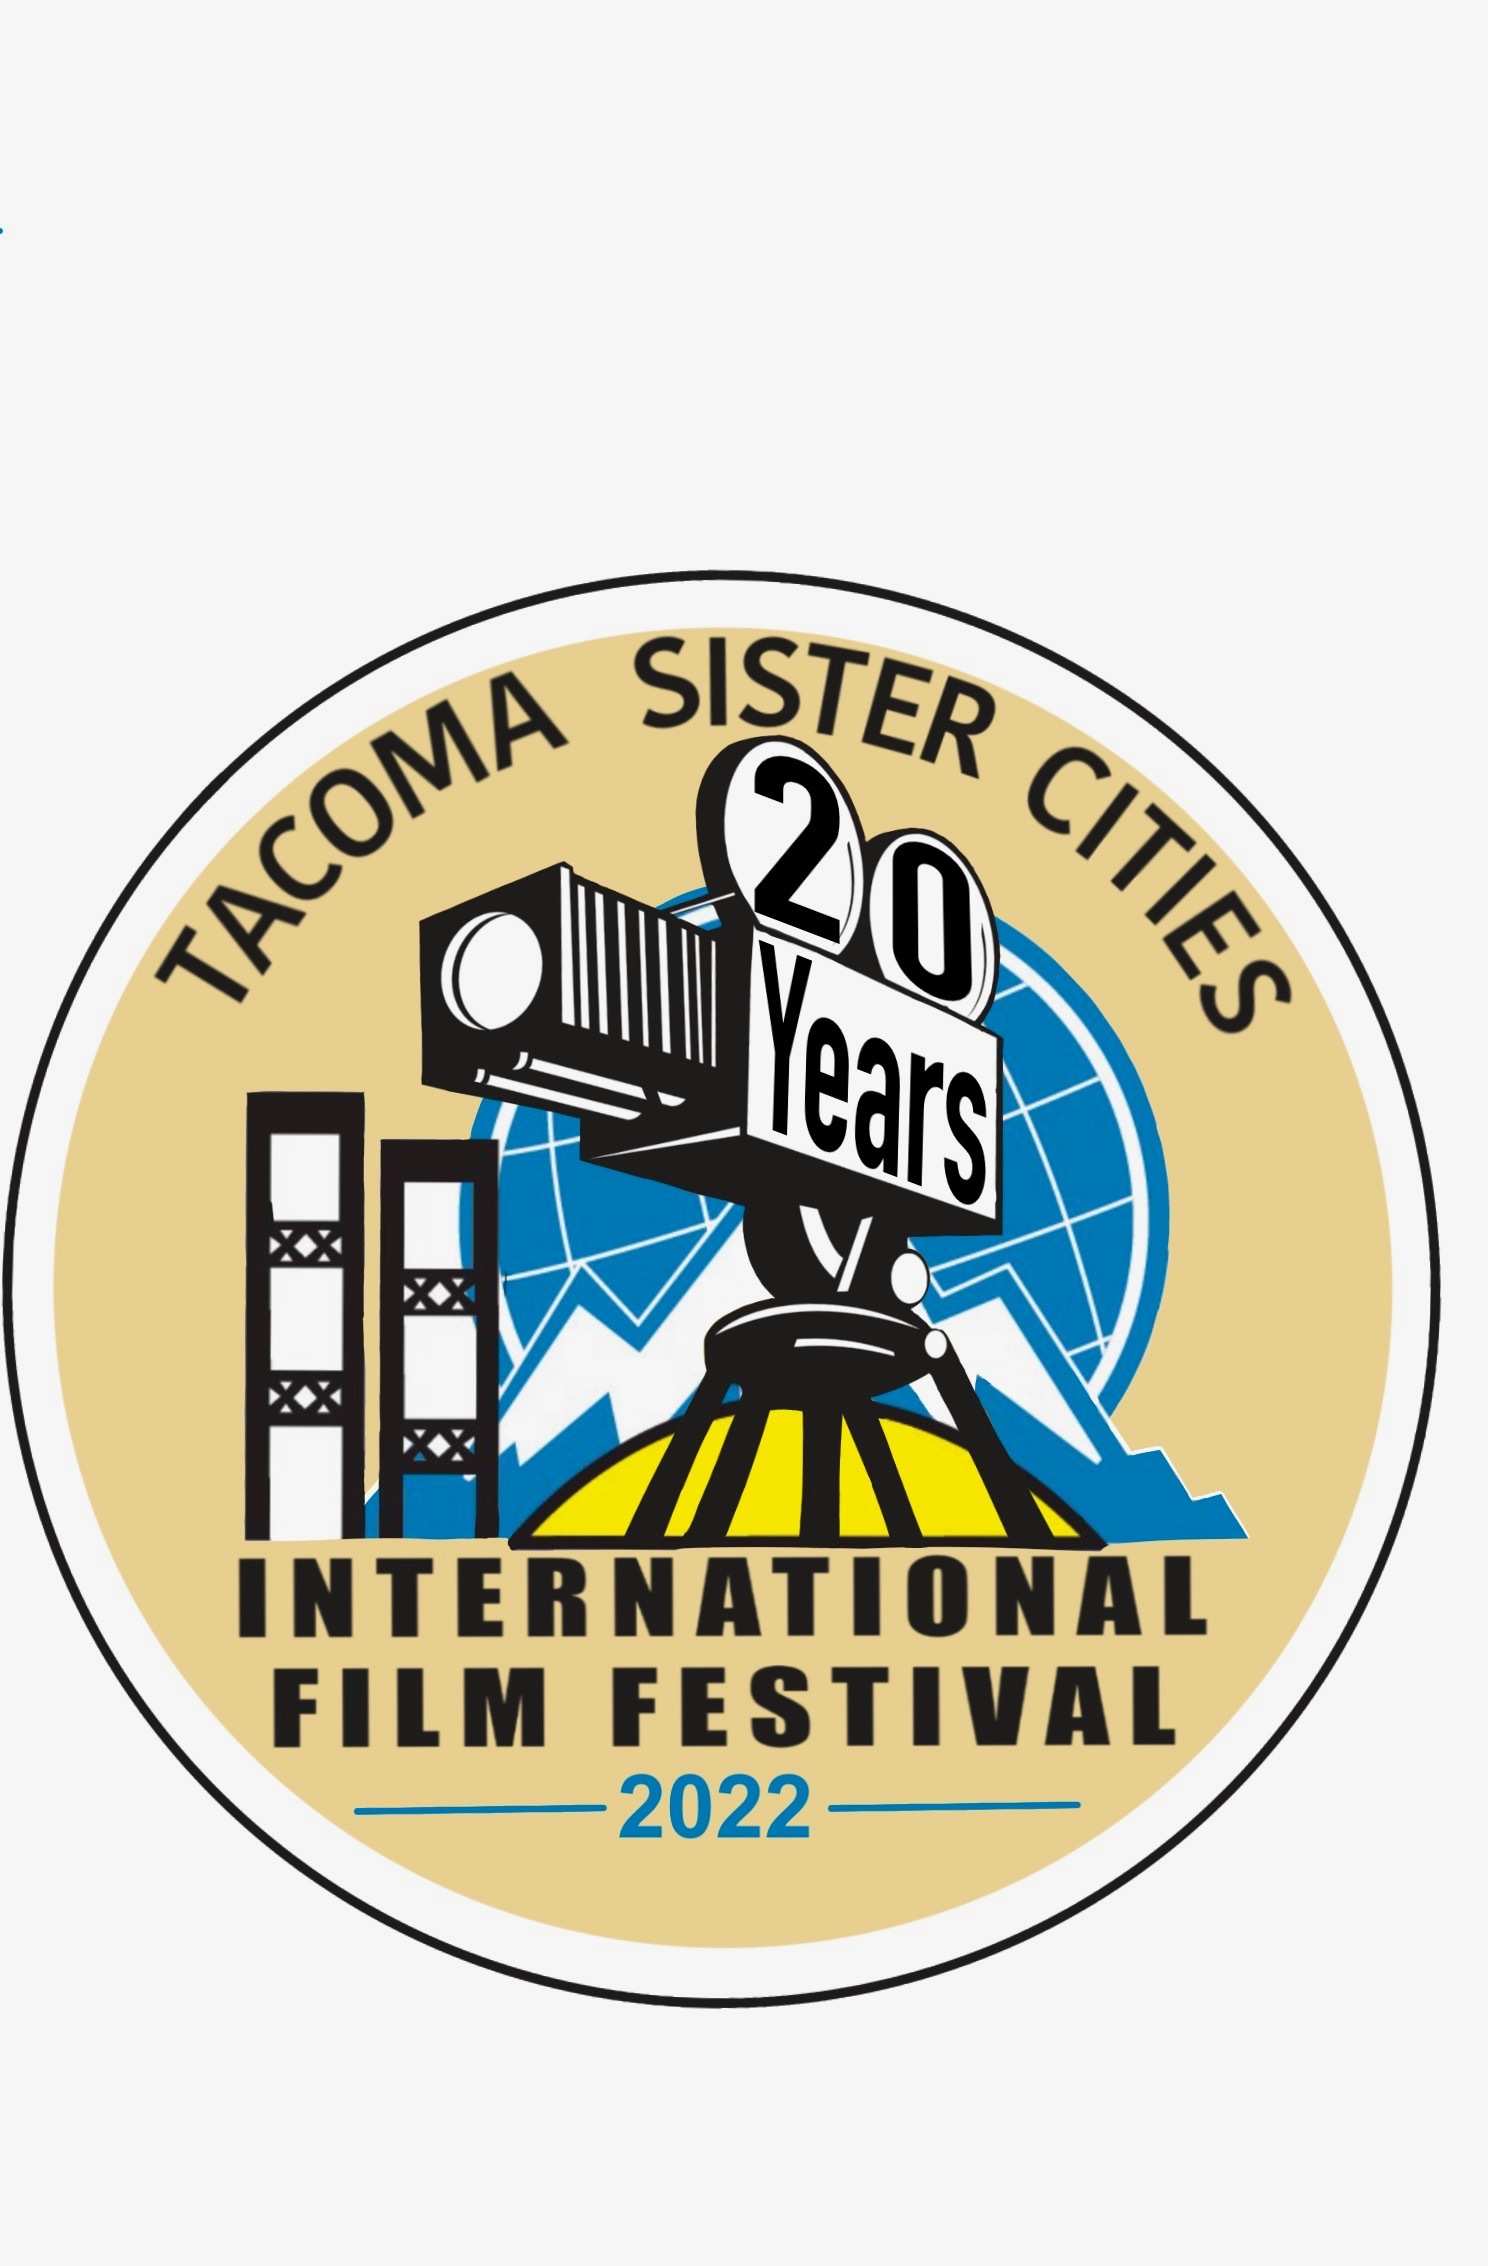 Tacoma Sister Cities International Film Festival